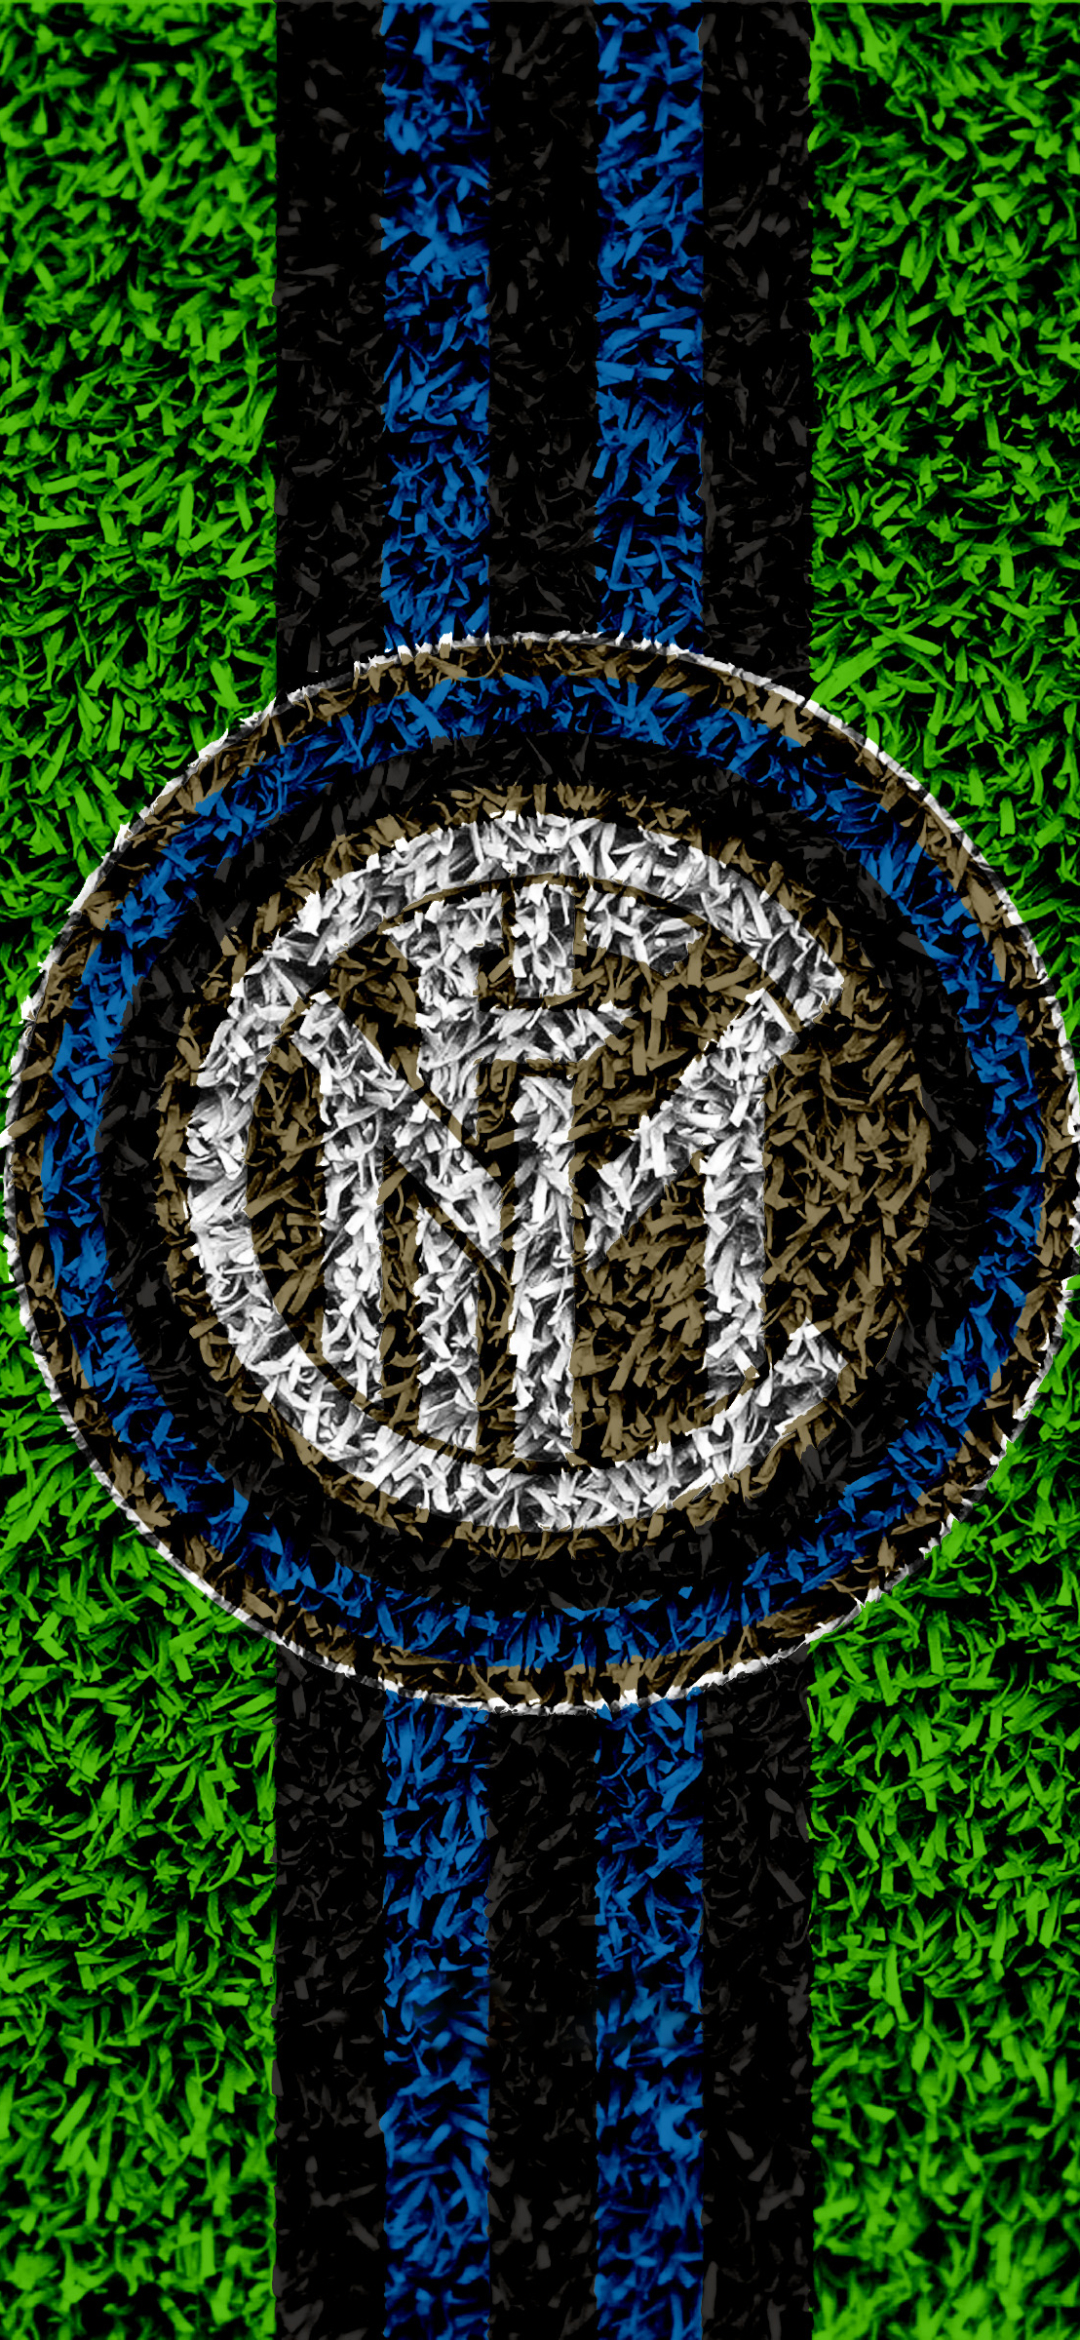 Descarga gratuita de fondo de pantalla para móvil de Fútbol, Logo, Emblema, Deporte, Inter De Milán.